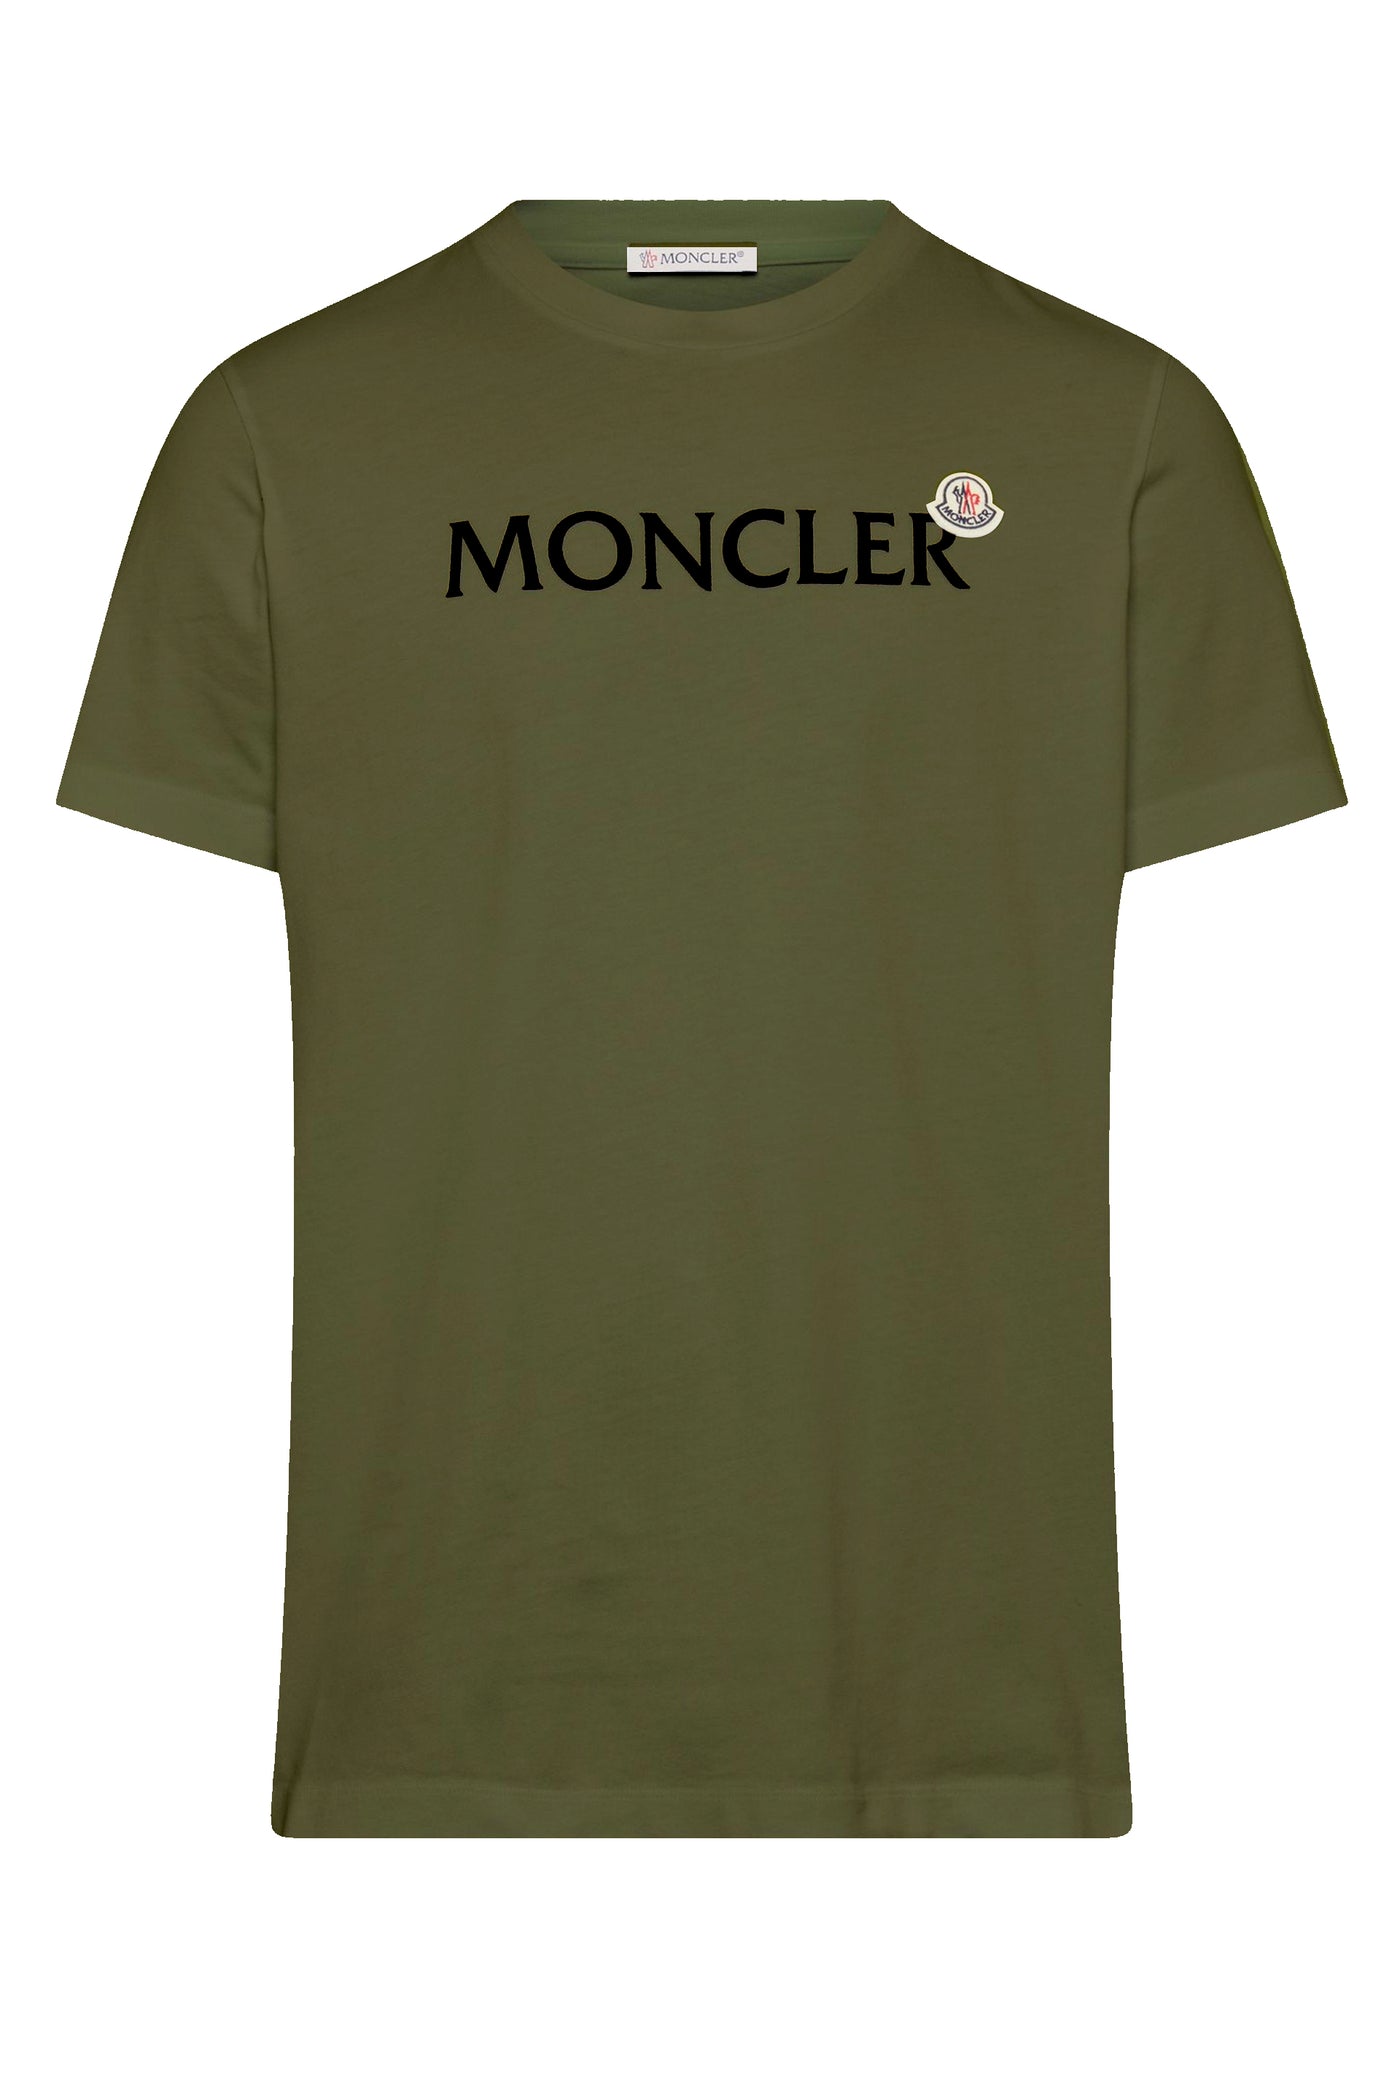 MONCLER - SS t-shirt "Moncler" kaki